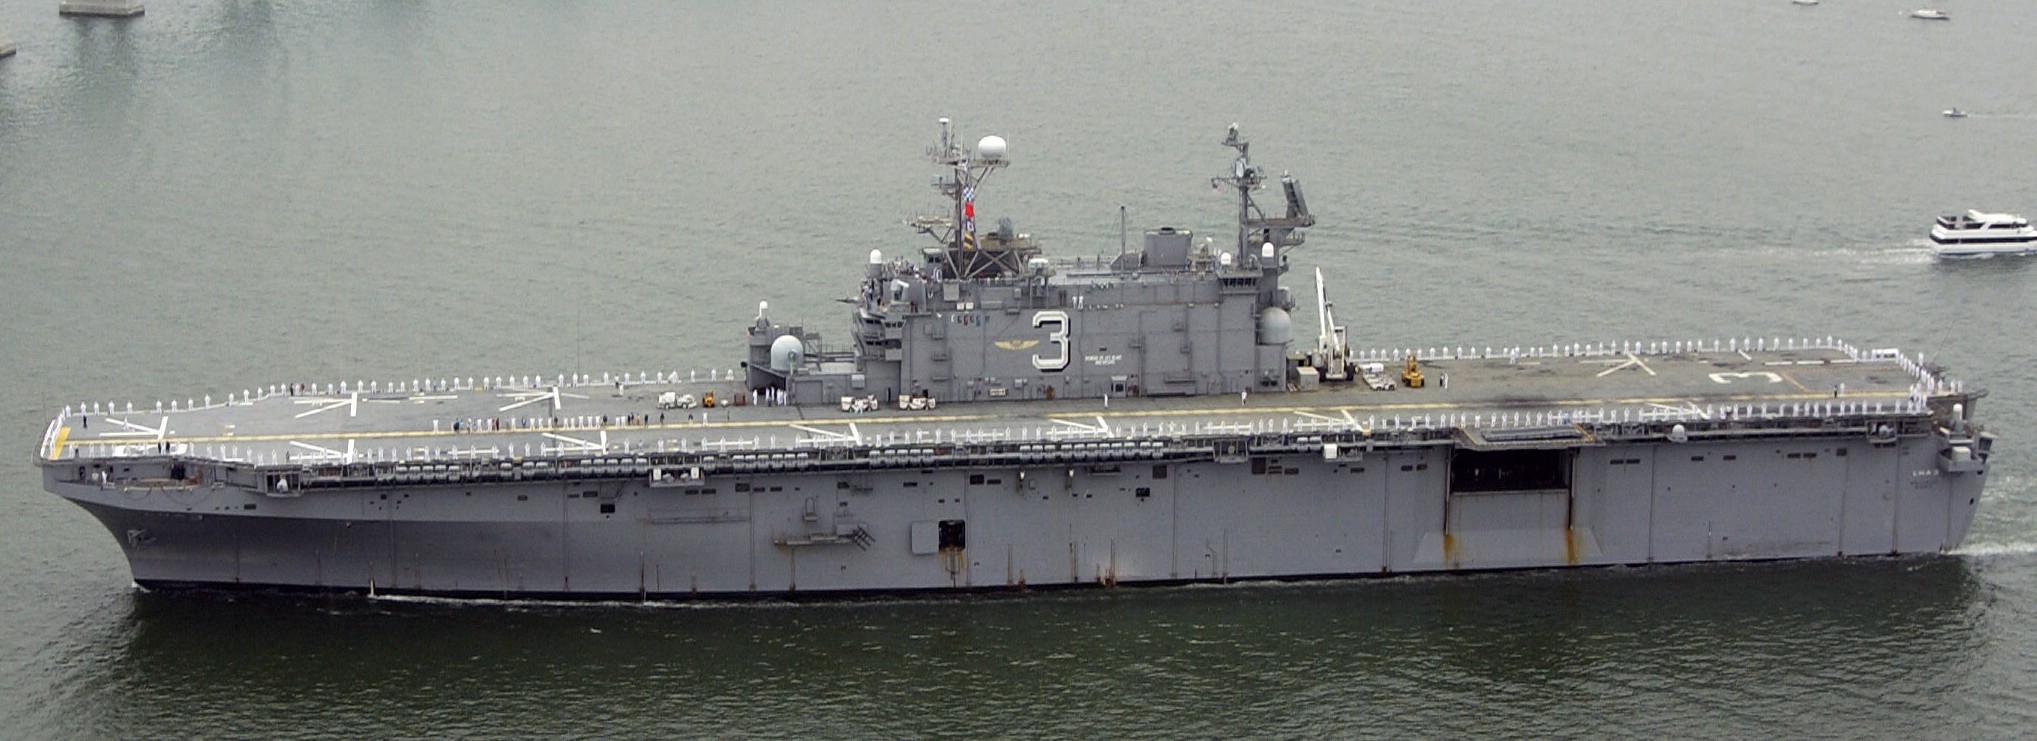 lha-3 uss belleau wood tarawa class amphibious assault ship us navy 08 naval base san diego